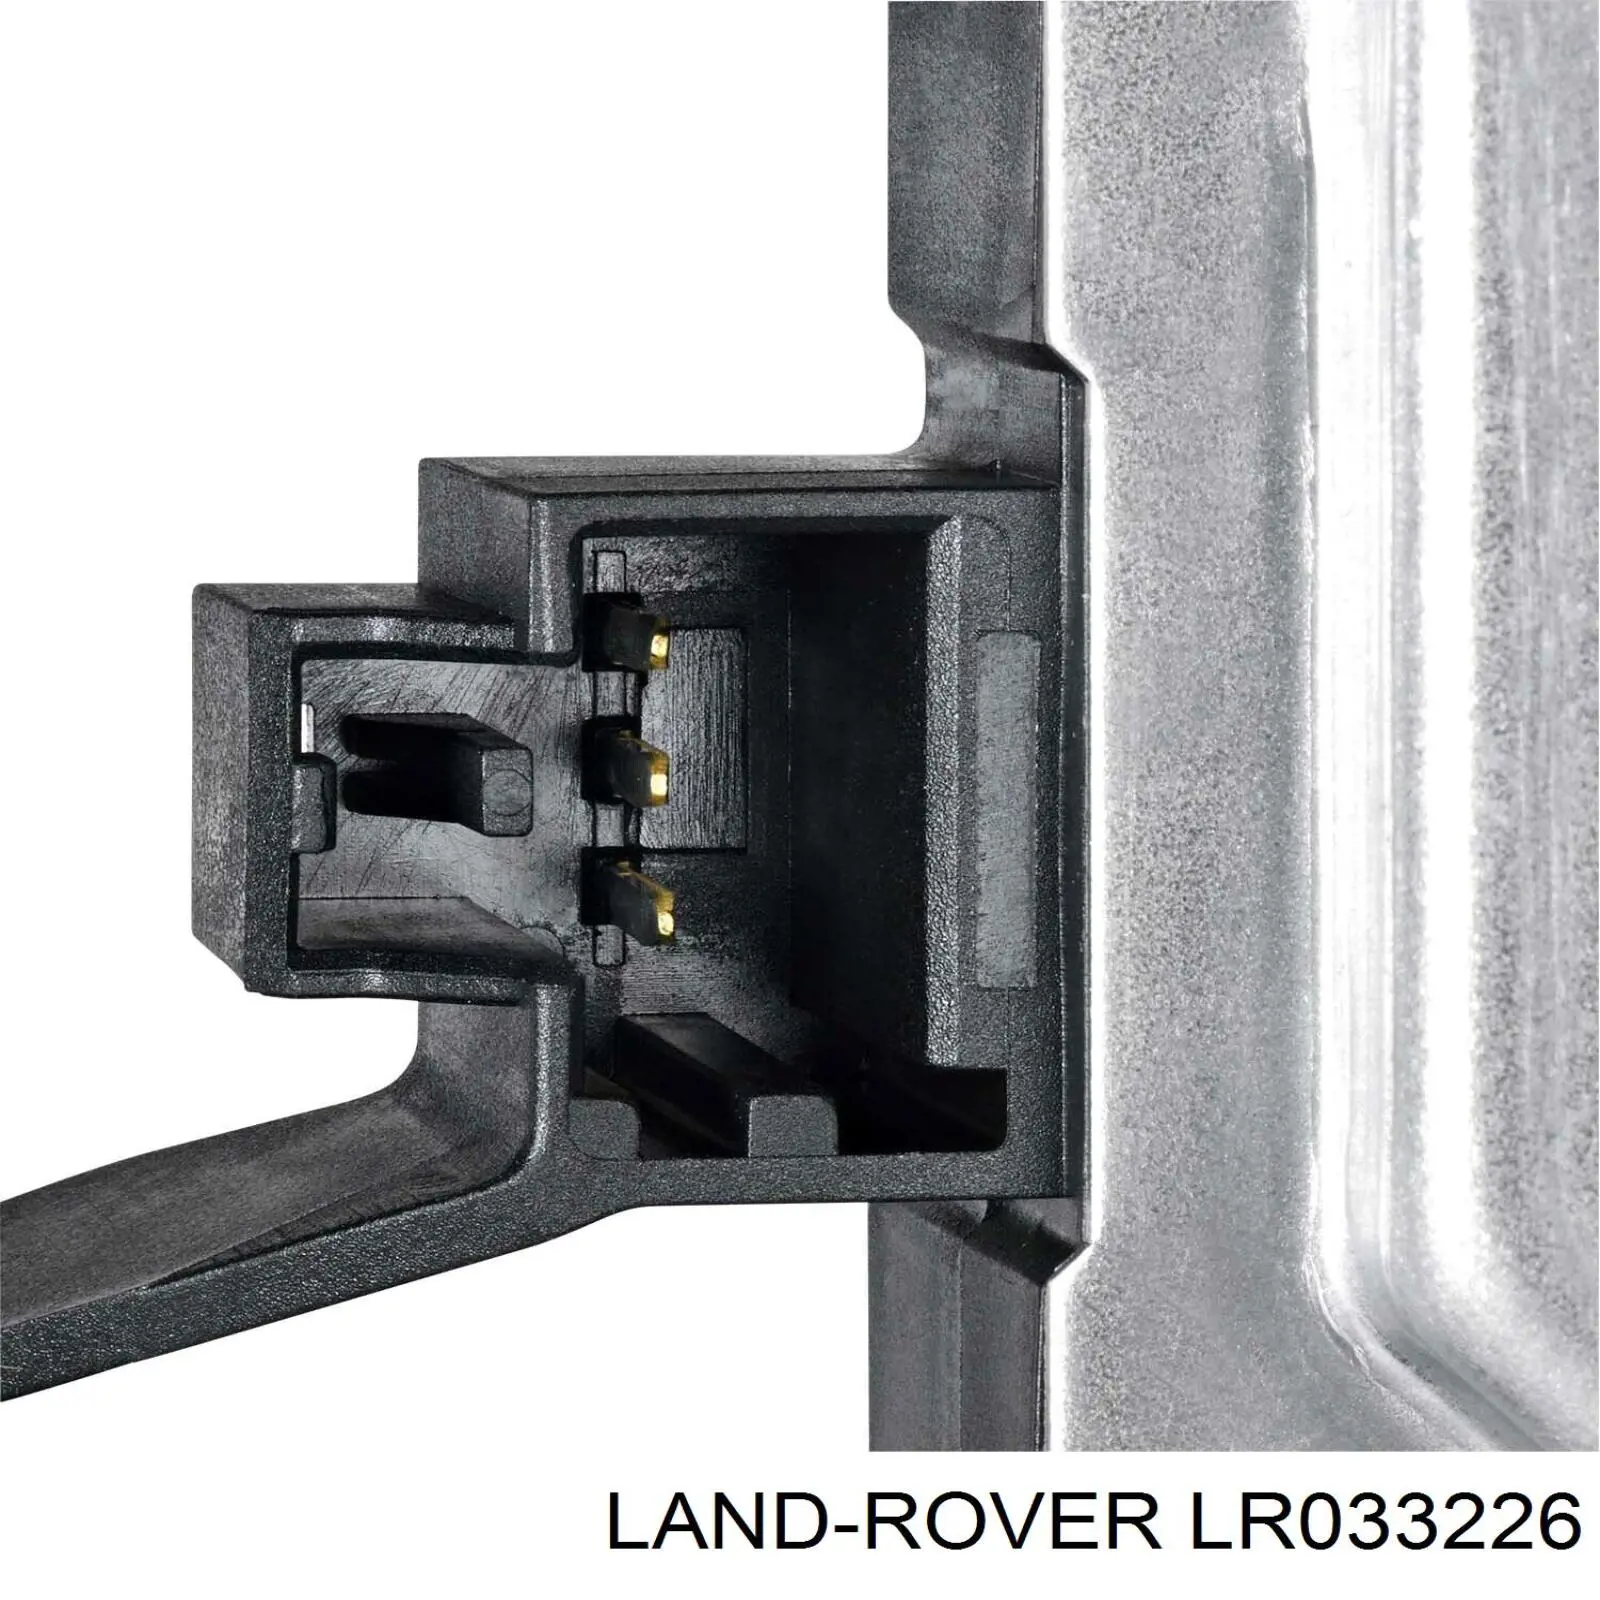 LR002243 Land Rover motor limpiaparabrisas, trasera